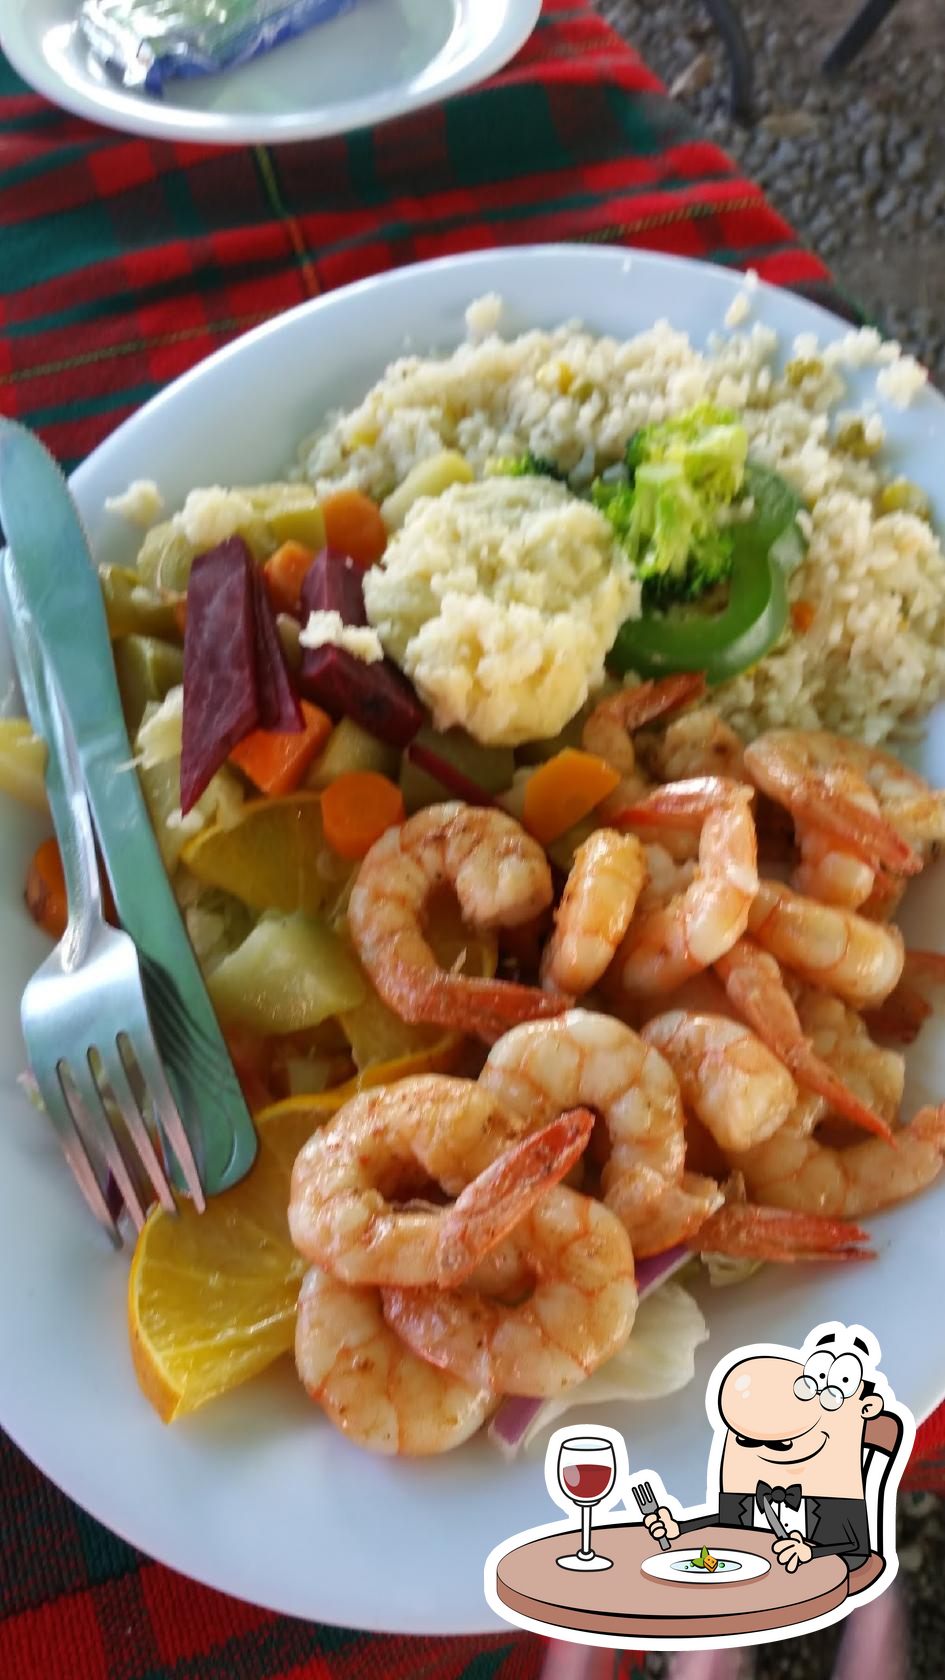 Mariscos Puerto de Veracruz restaurant, Villa de Álvarez - Restaurant menu  and reviews